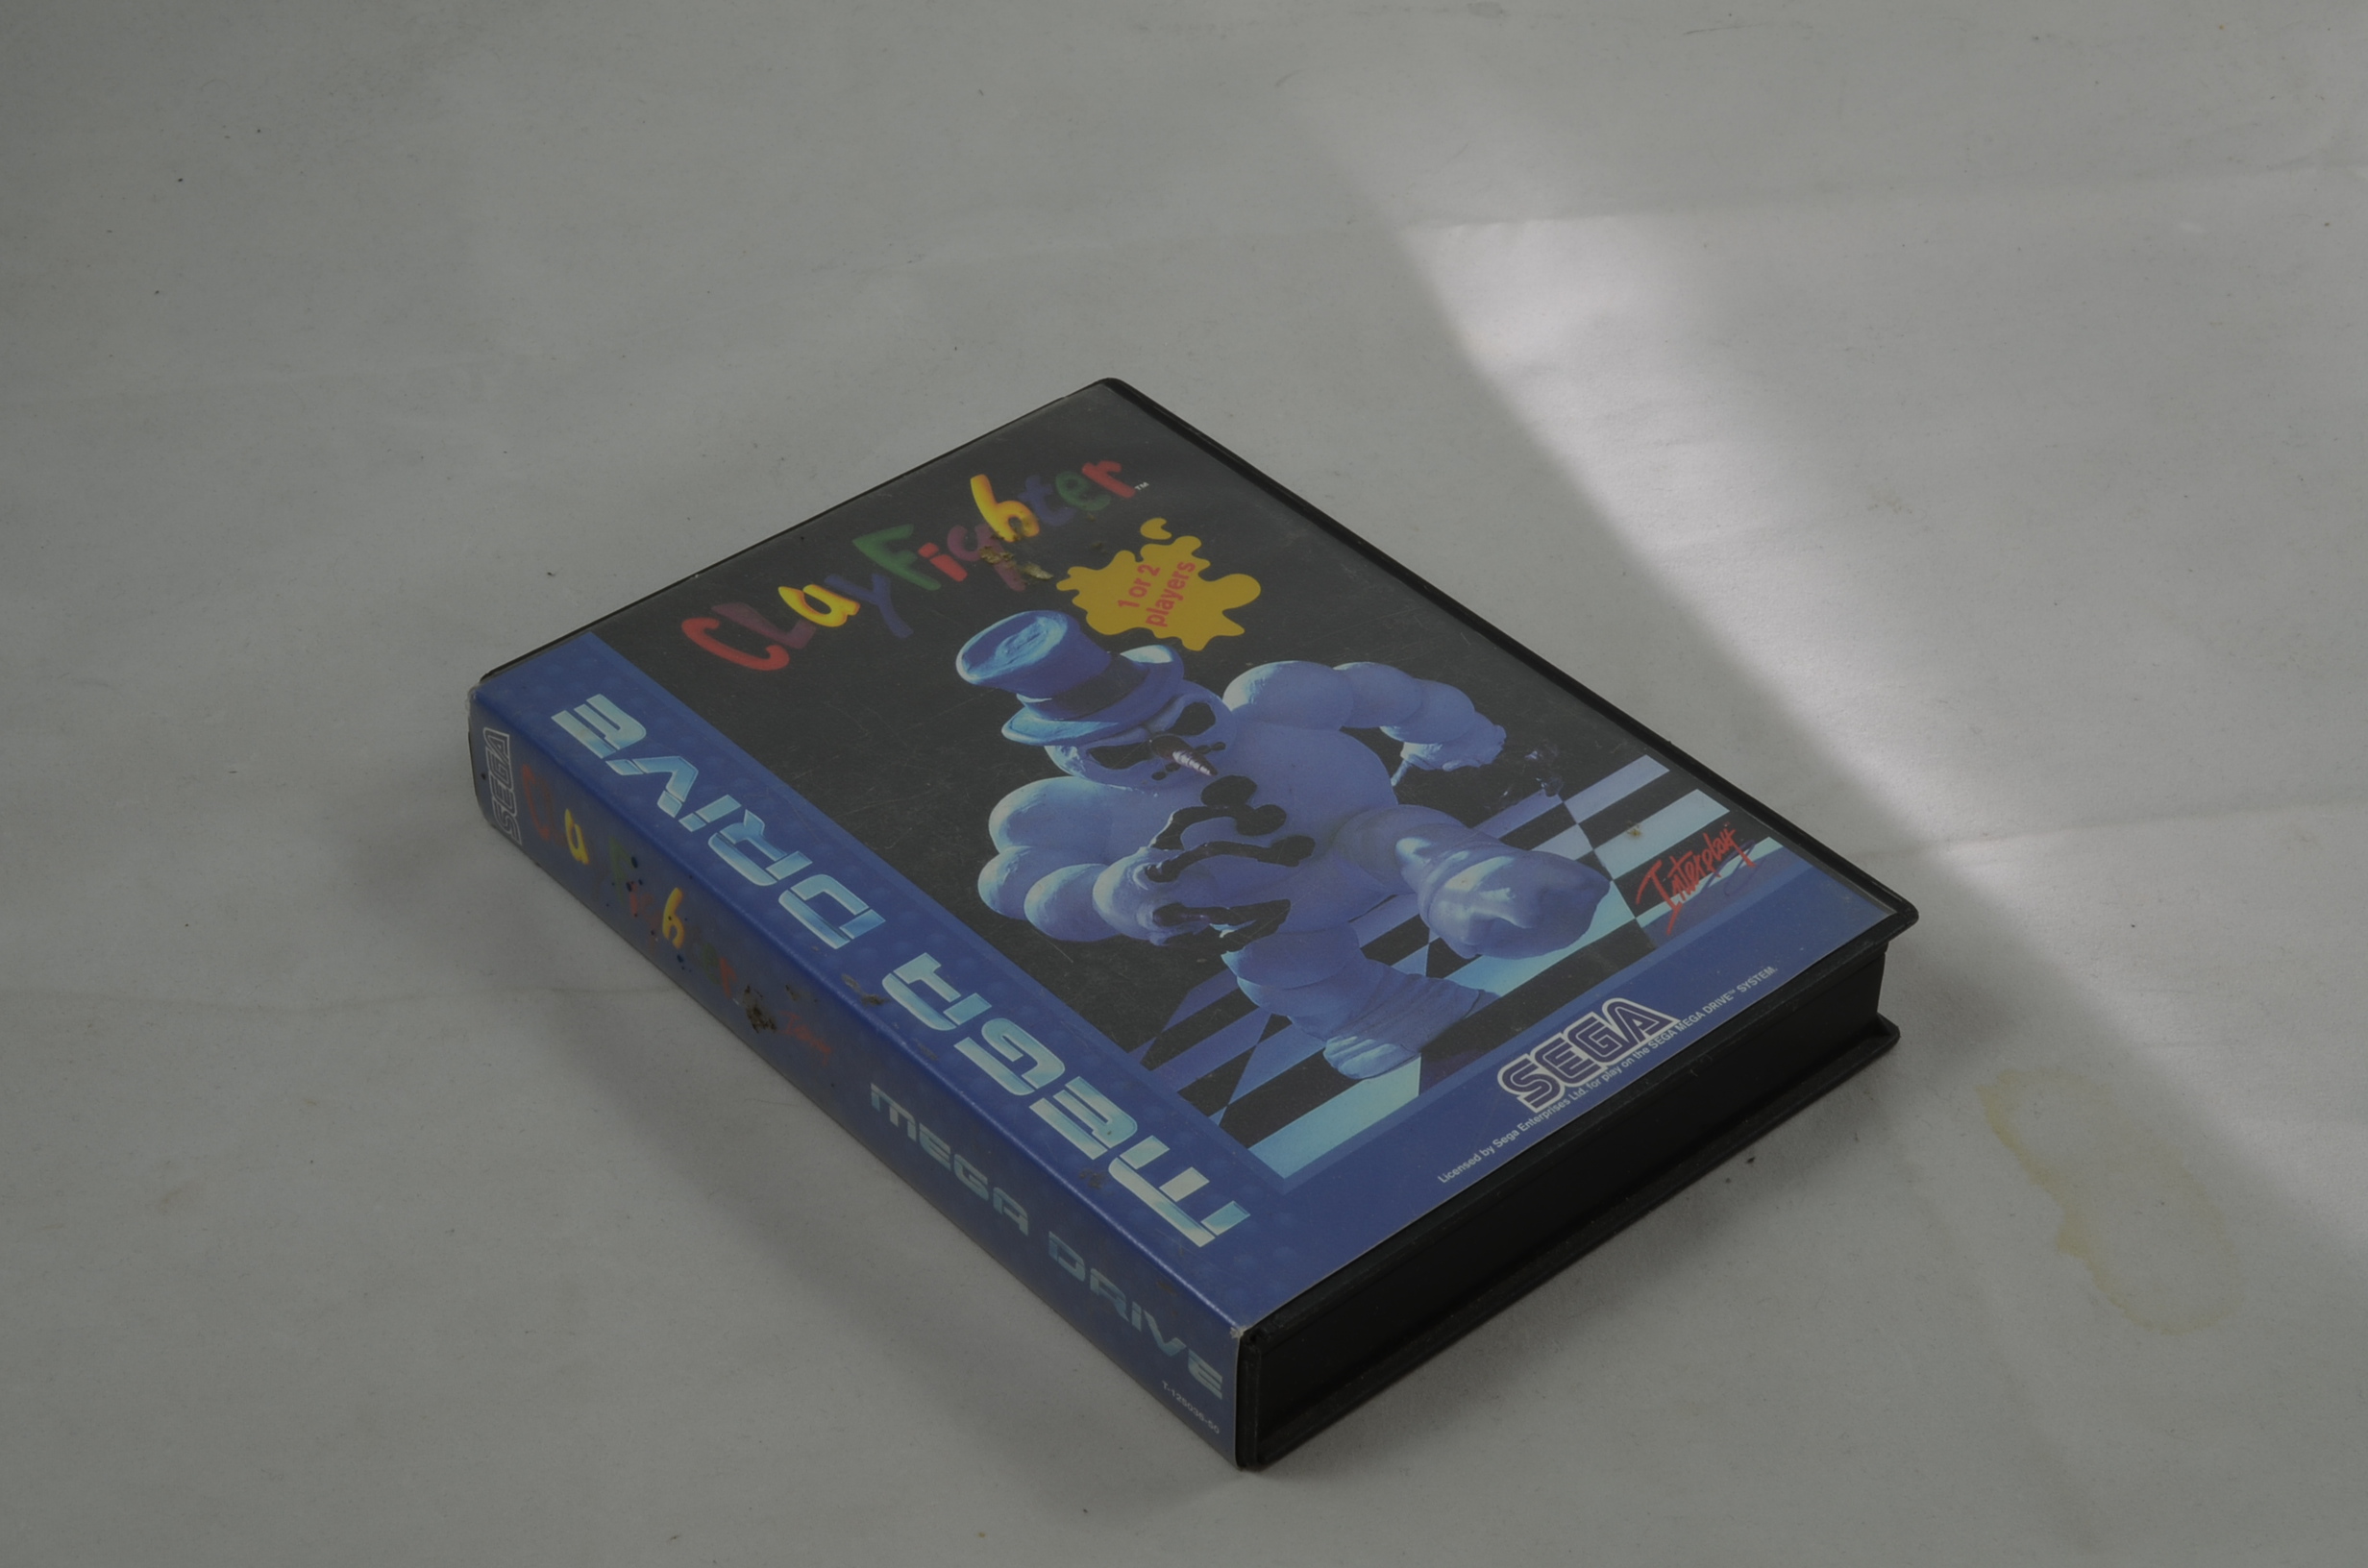 Produktbild von Clay Fighter Sega Mega Drive Spiel CIB